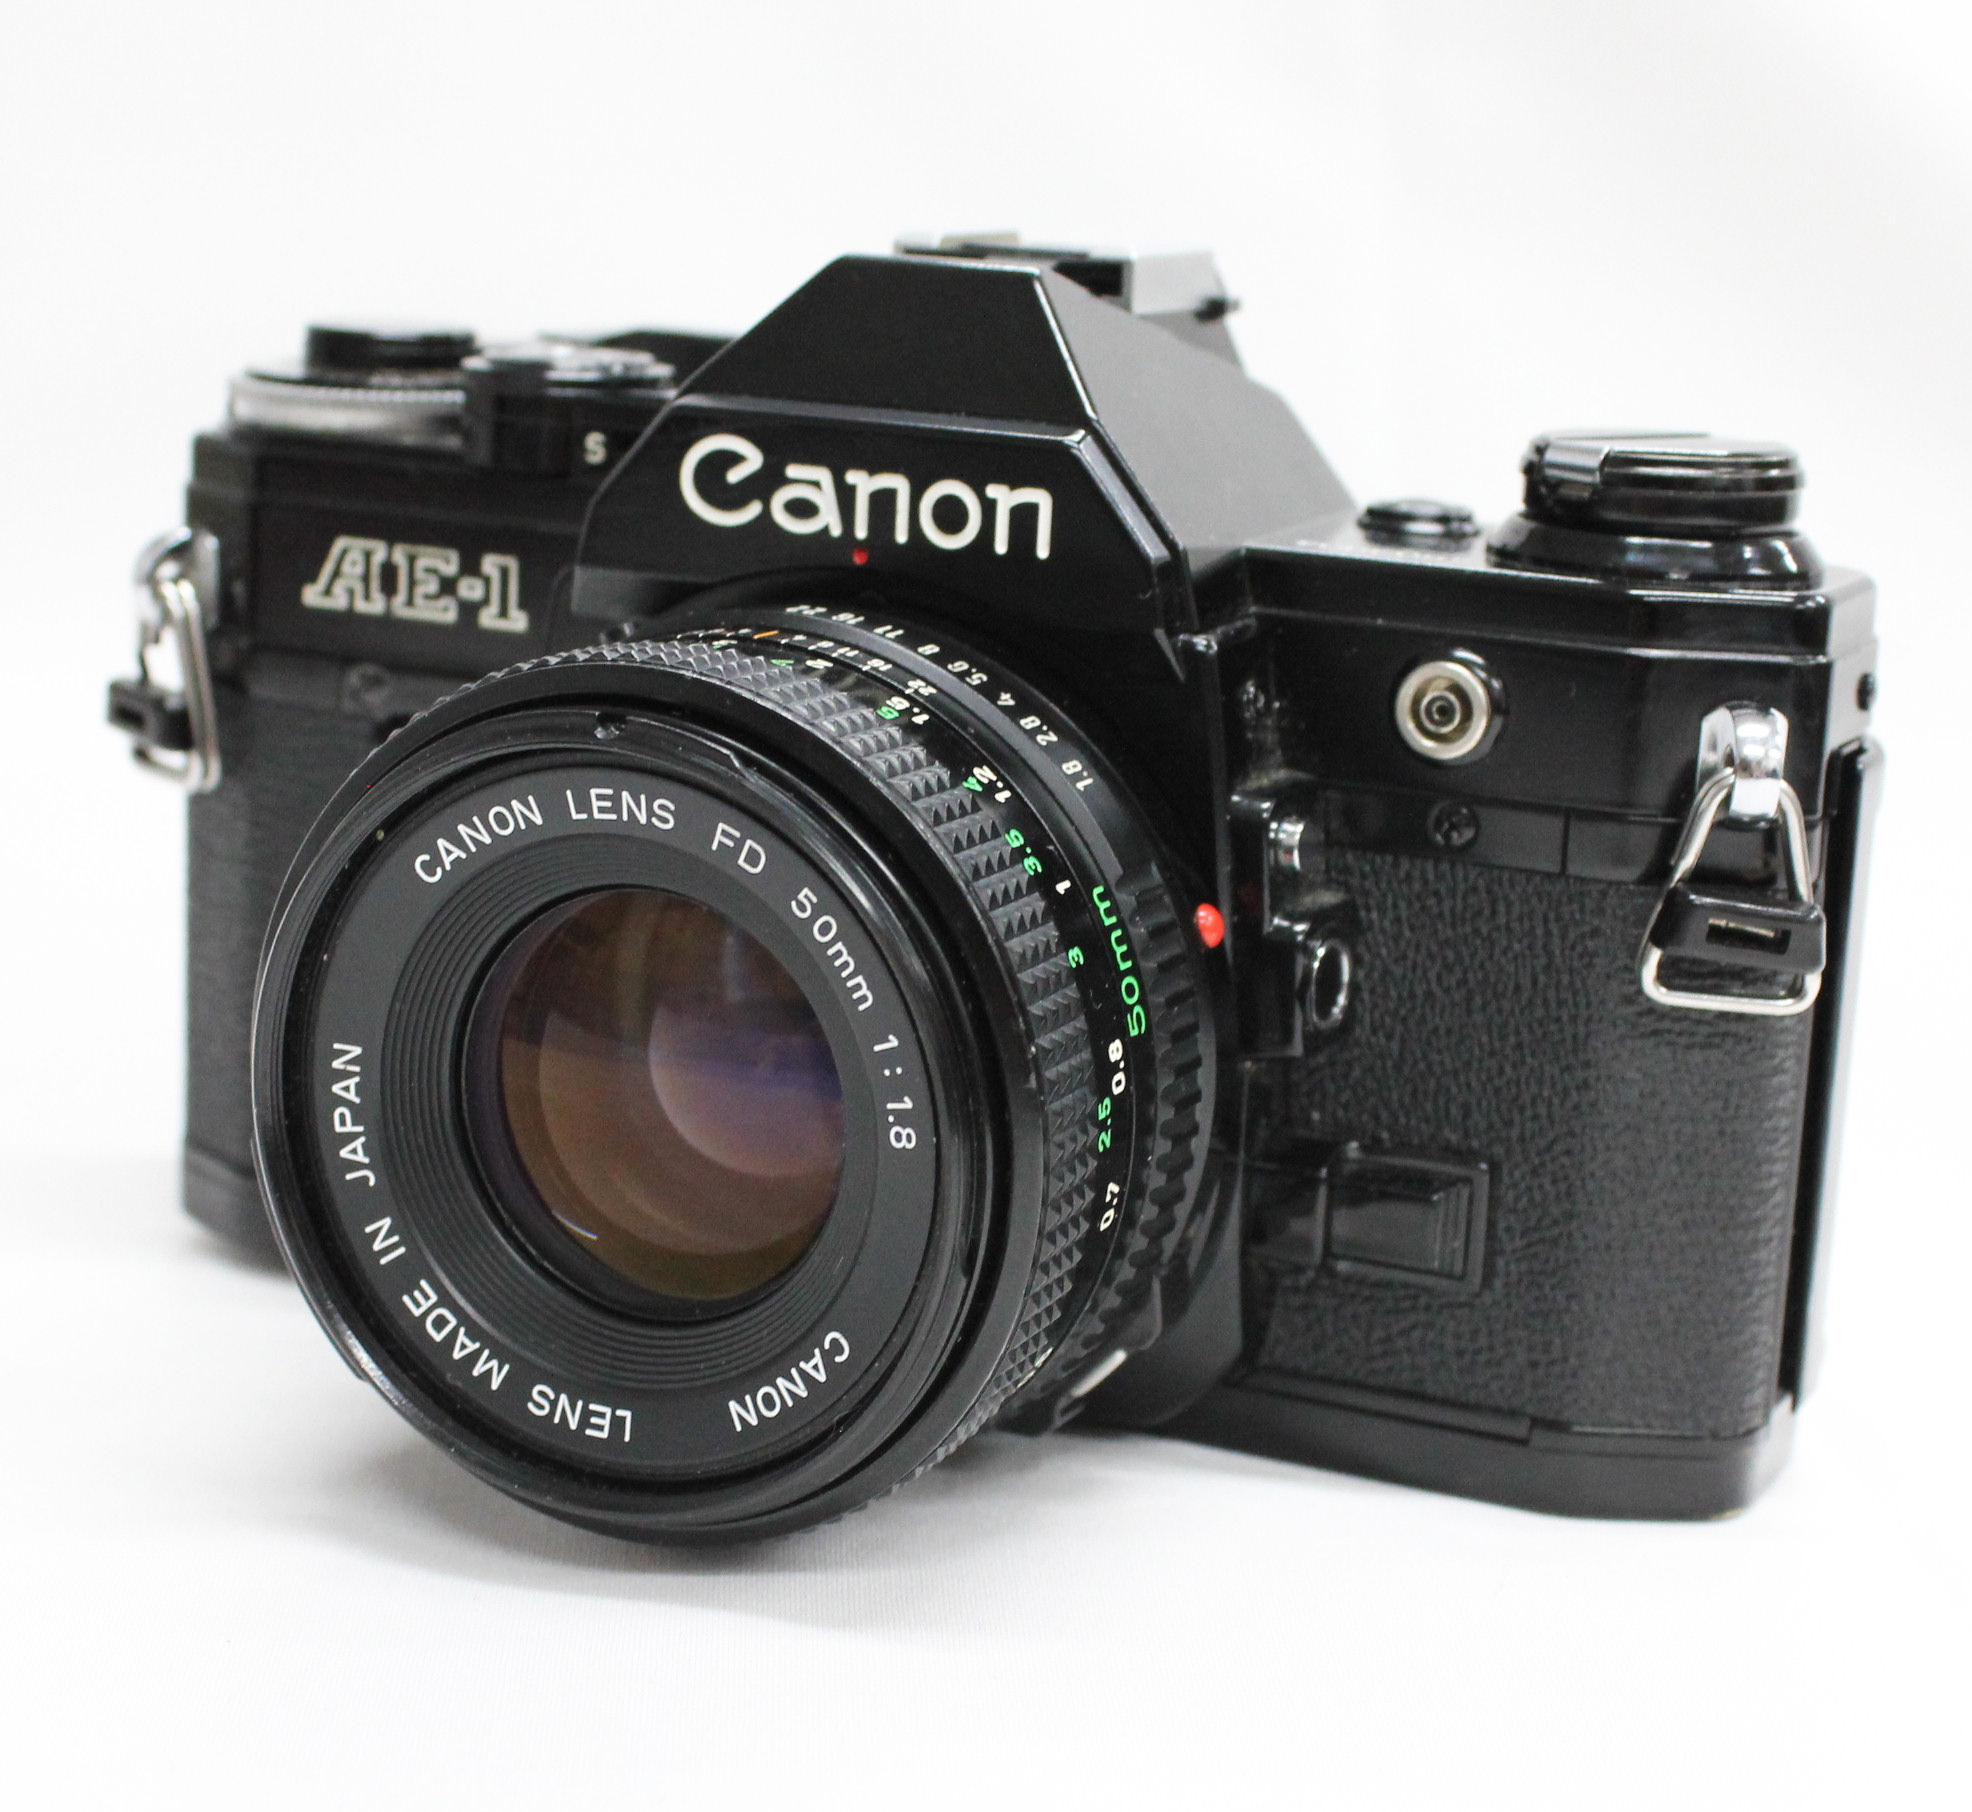 Afname Profeet telex Canon AE-1 Program 35mm SLR Film Camera Black with New FD 50mm F/1.4 Lens  from Japan (C1840) | Big Fish J-Camera (Big Fish J-Shop)